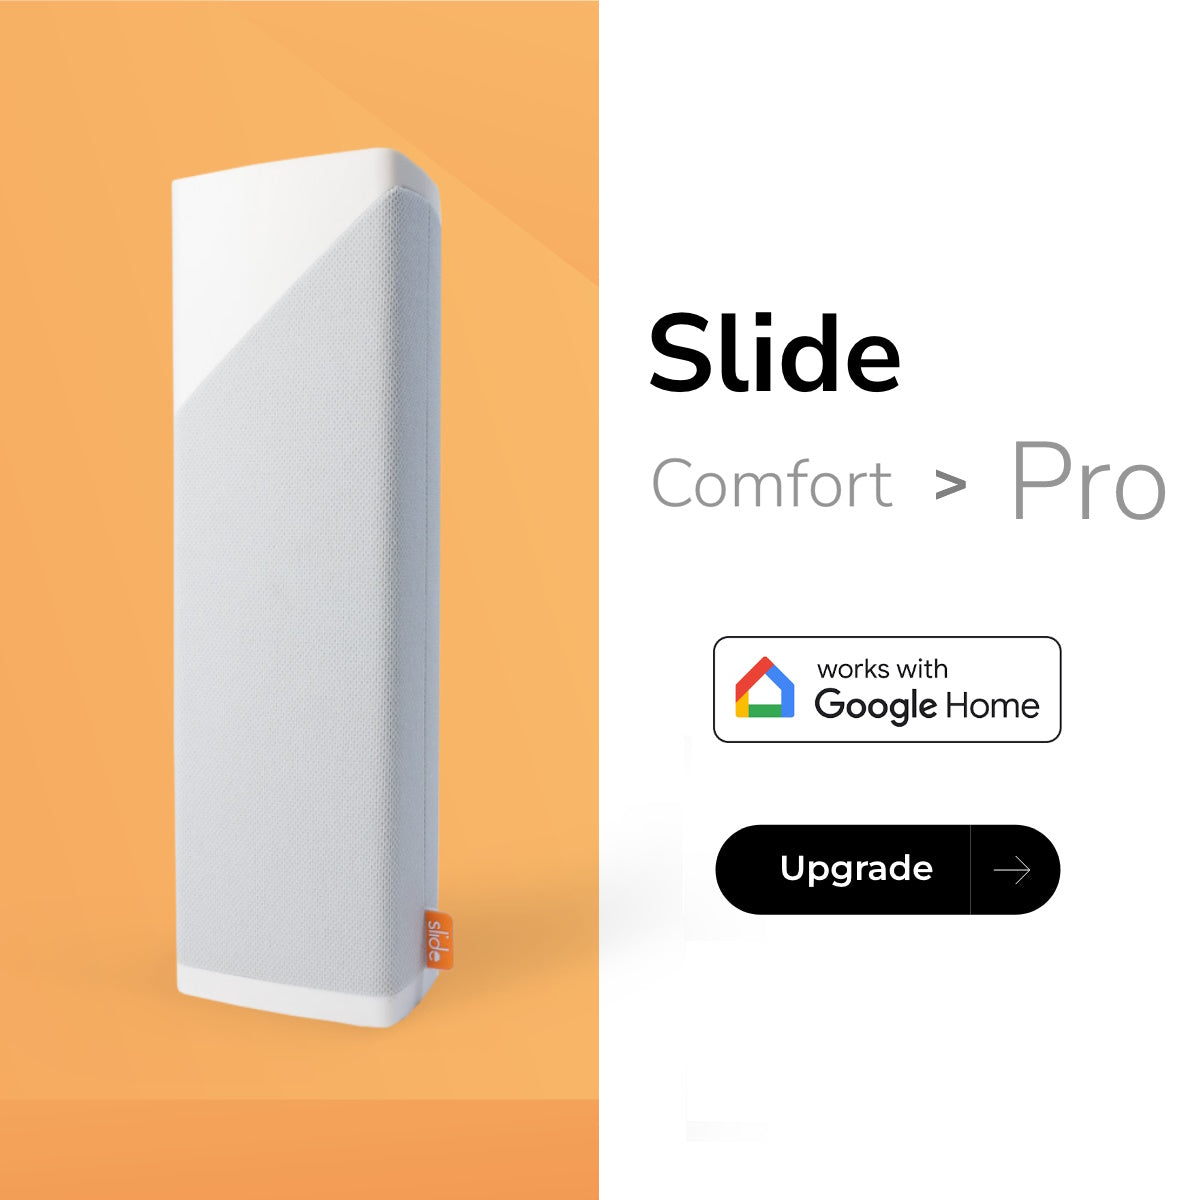 Slide upgrade (Comfort > Pro)